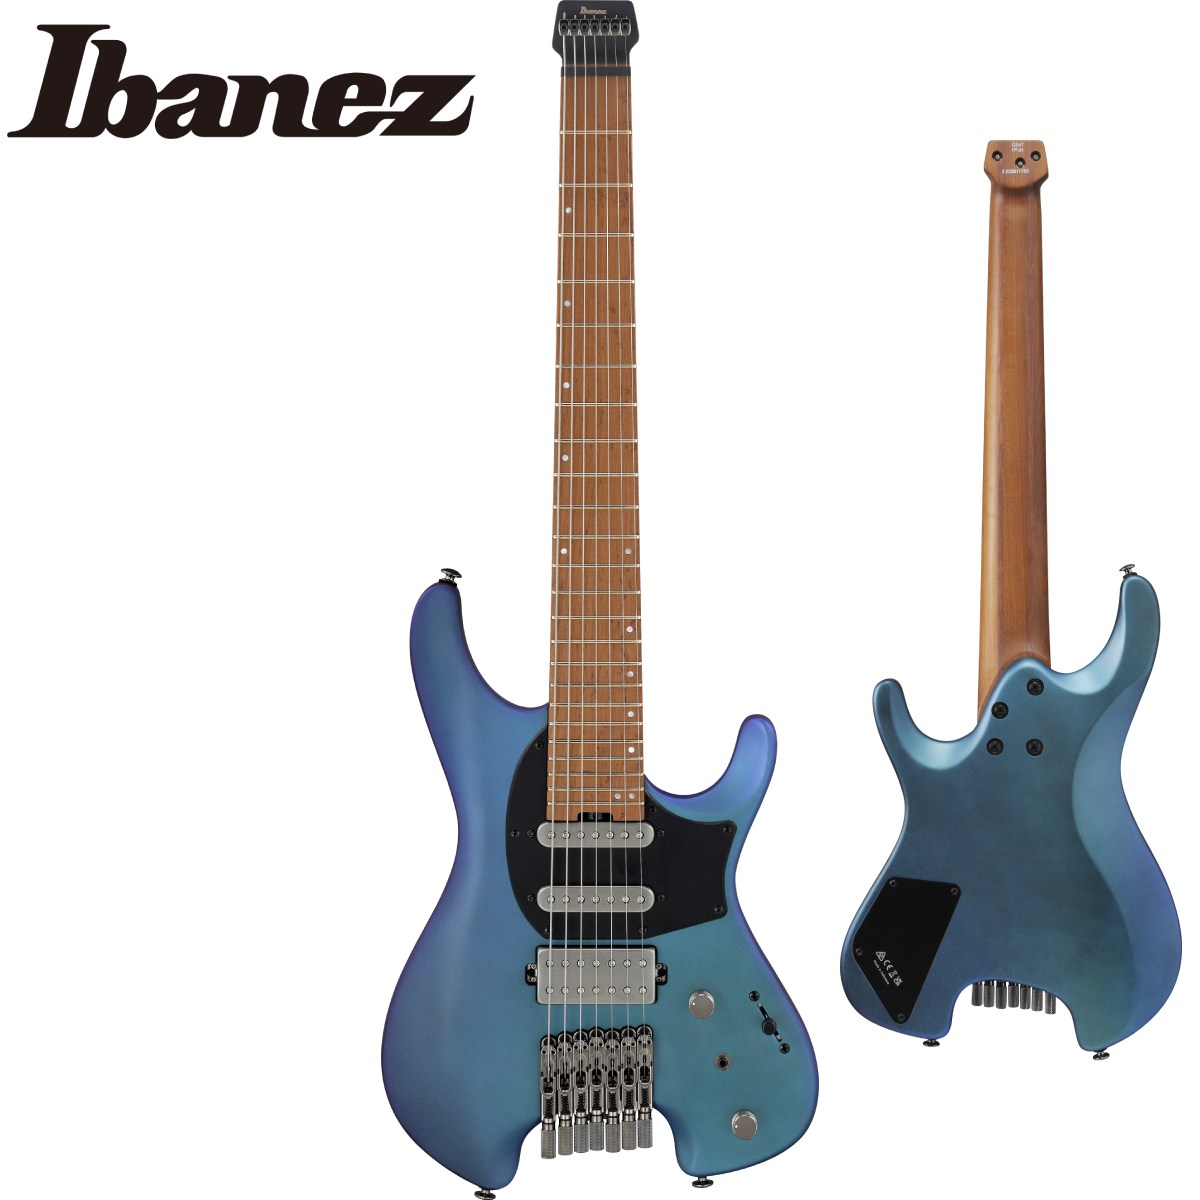 Ibanez Q547 -BMM (Blue Chameleon Metallic Matte)- 新品[アイバニーズ][青,ブルー][マジョーラ,マルチカラー][Electric Guitar,エレキギター][QUEST][Headless,ヘッドレス]